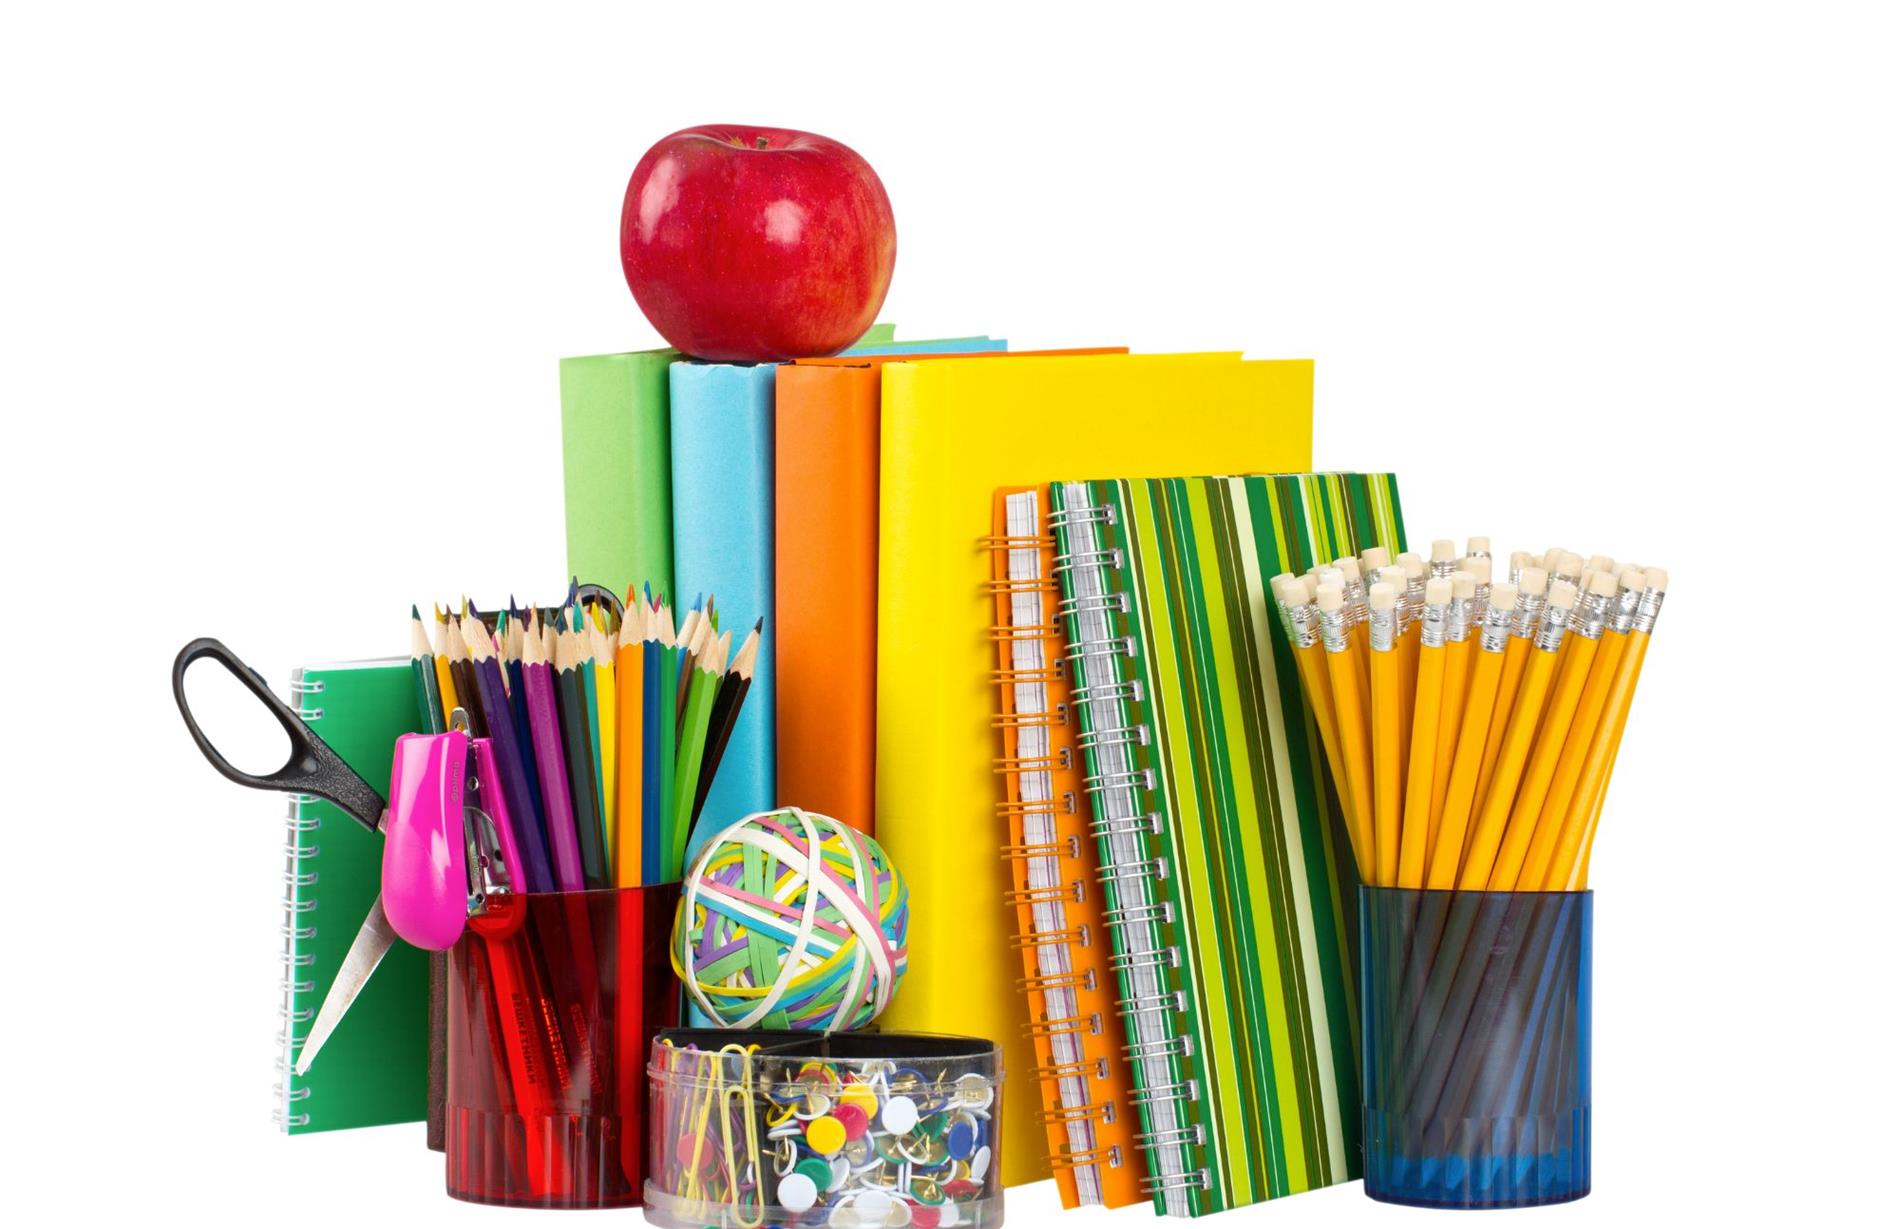 Photo of school supplies